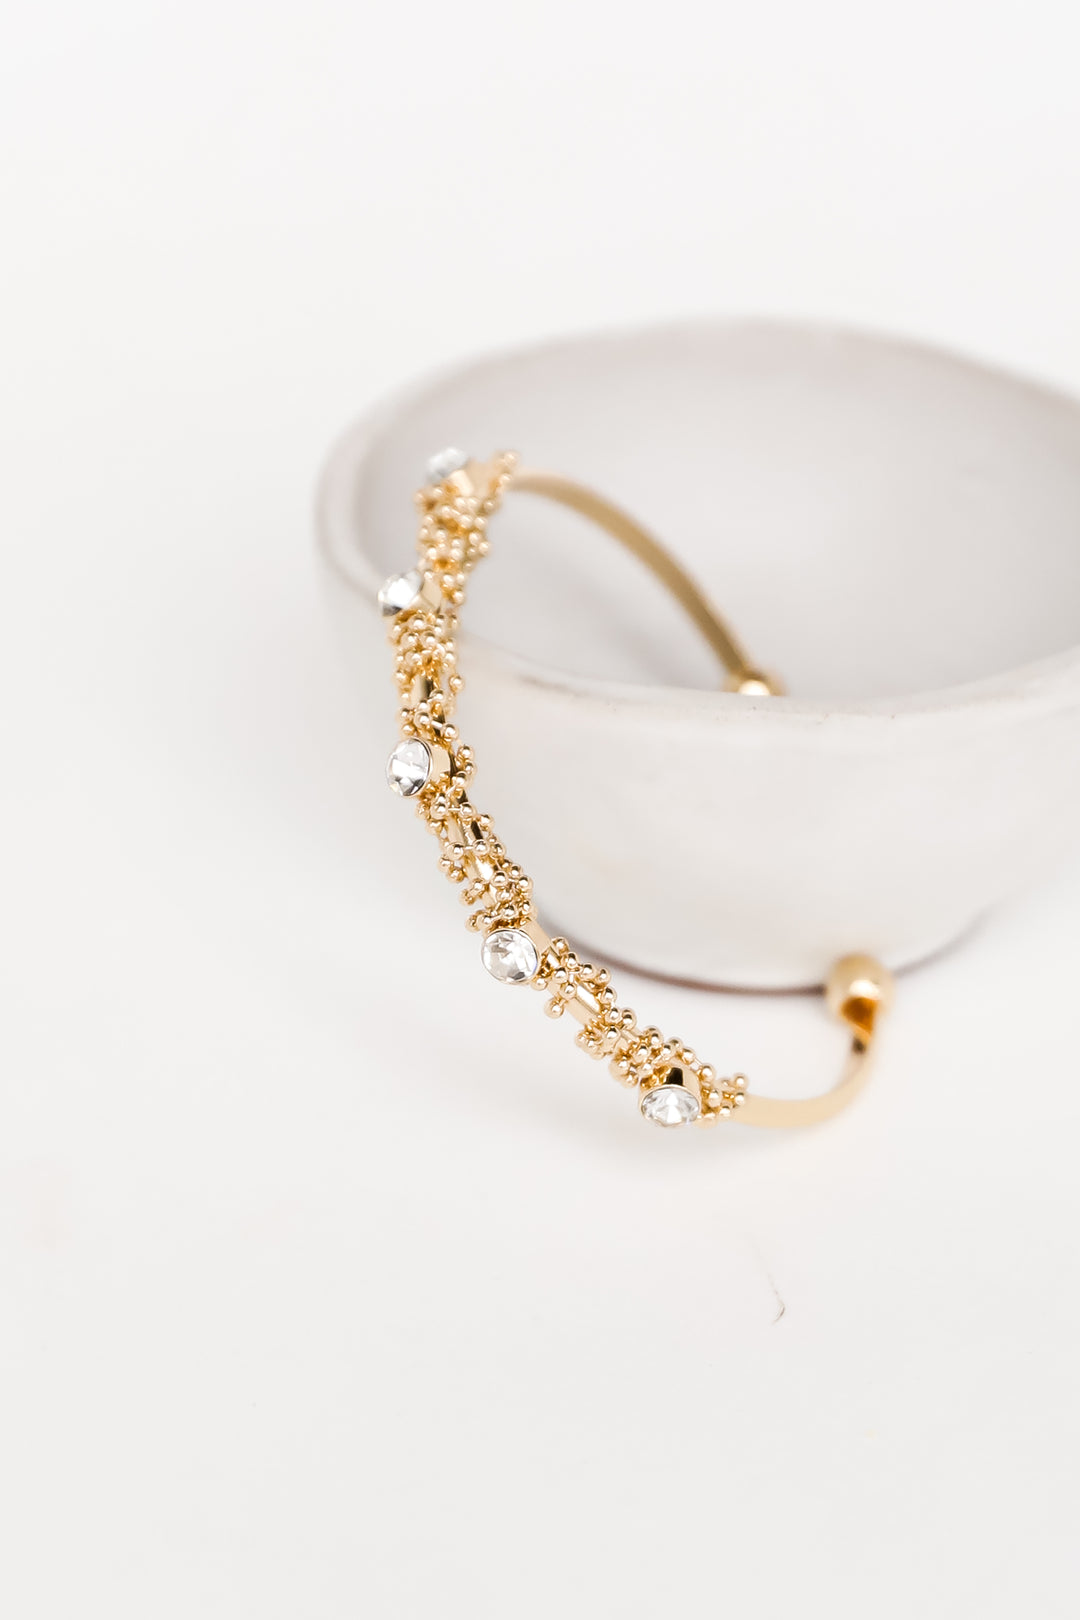 Gold Rhinestone Cuff Bracelet flat lay